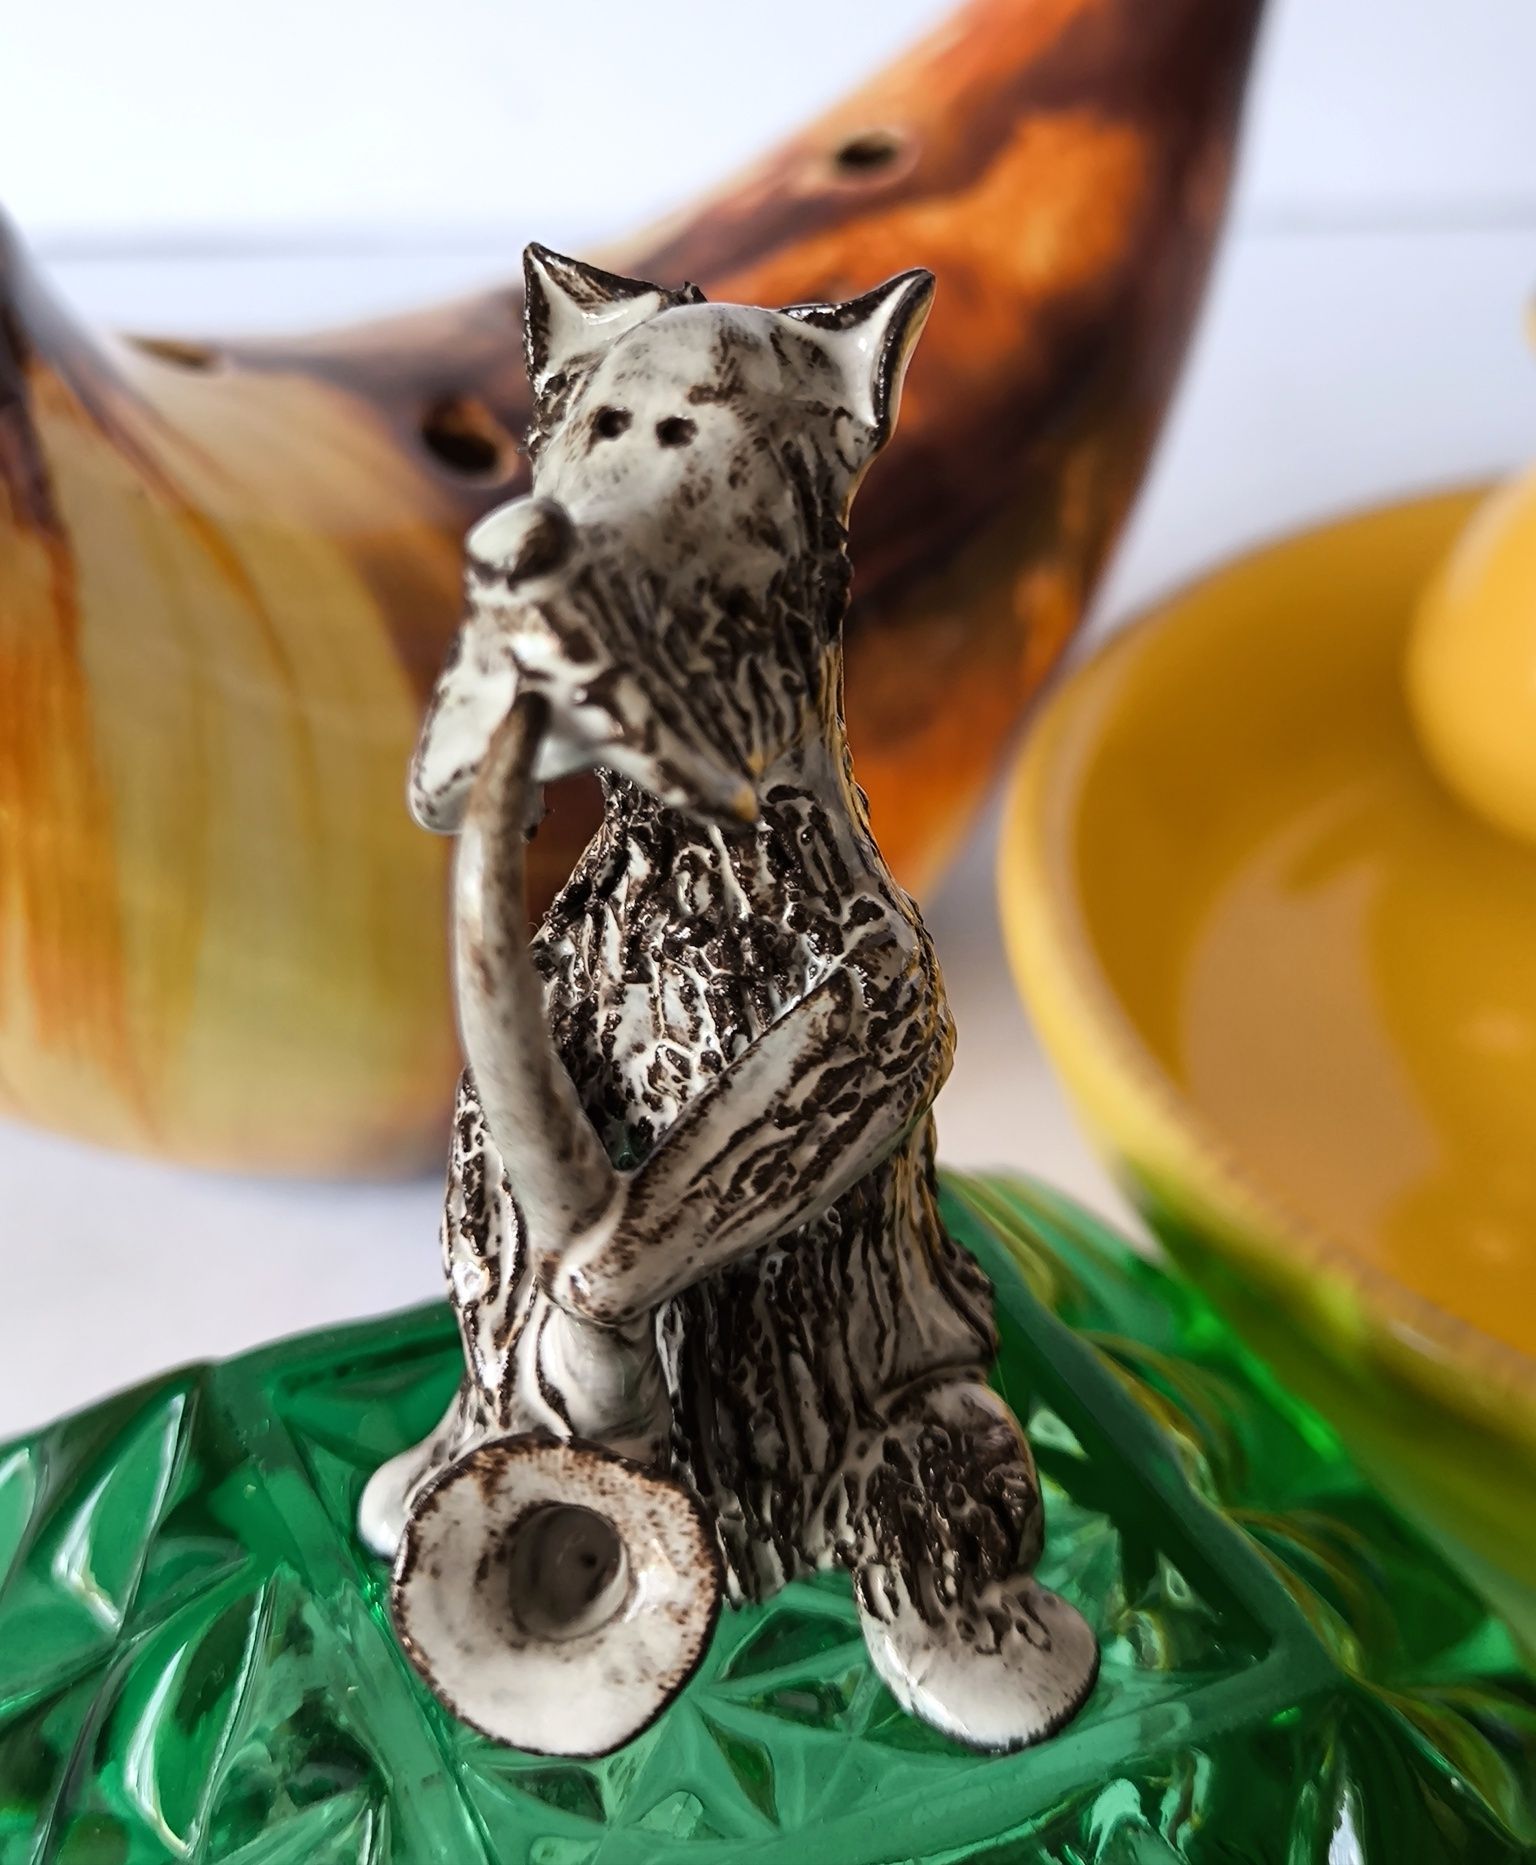 Figurki grajki kot pies piękna stara ceramika